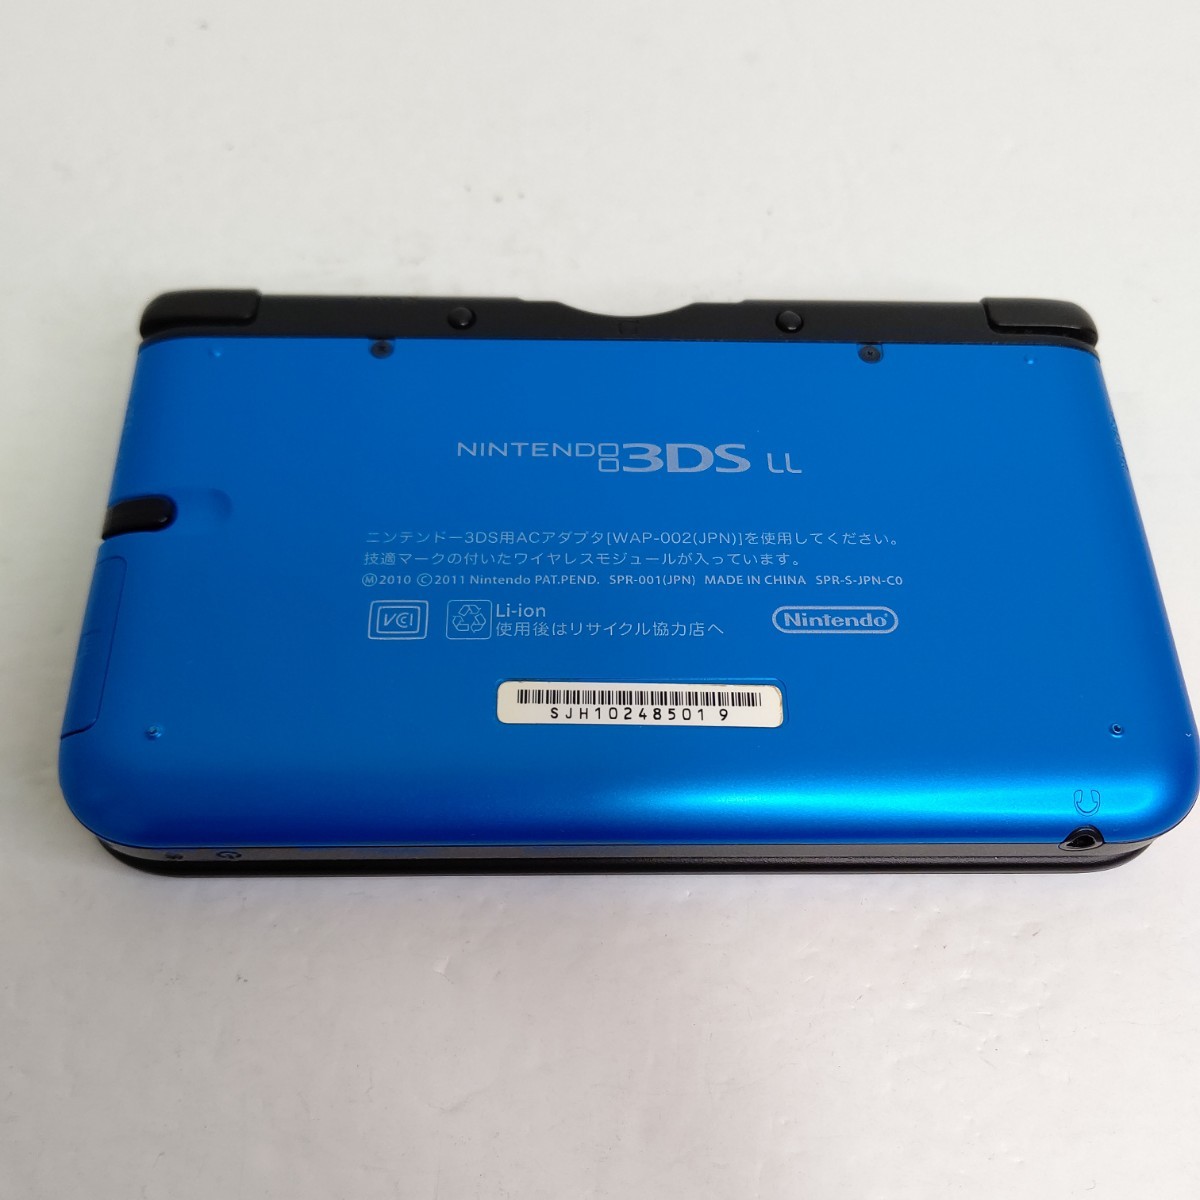 Nintendo Nintendo 3DSLL blue black screen ultimate beautiful goods nintendo 